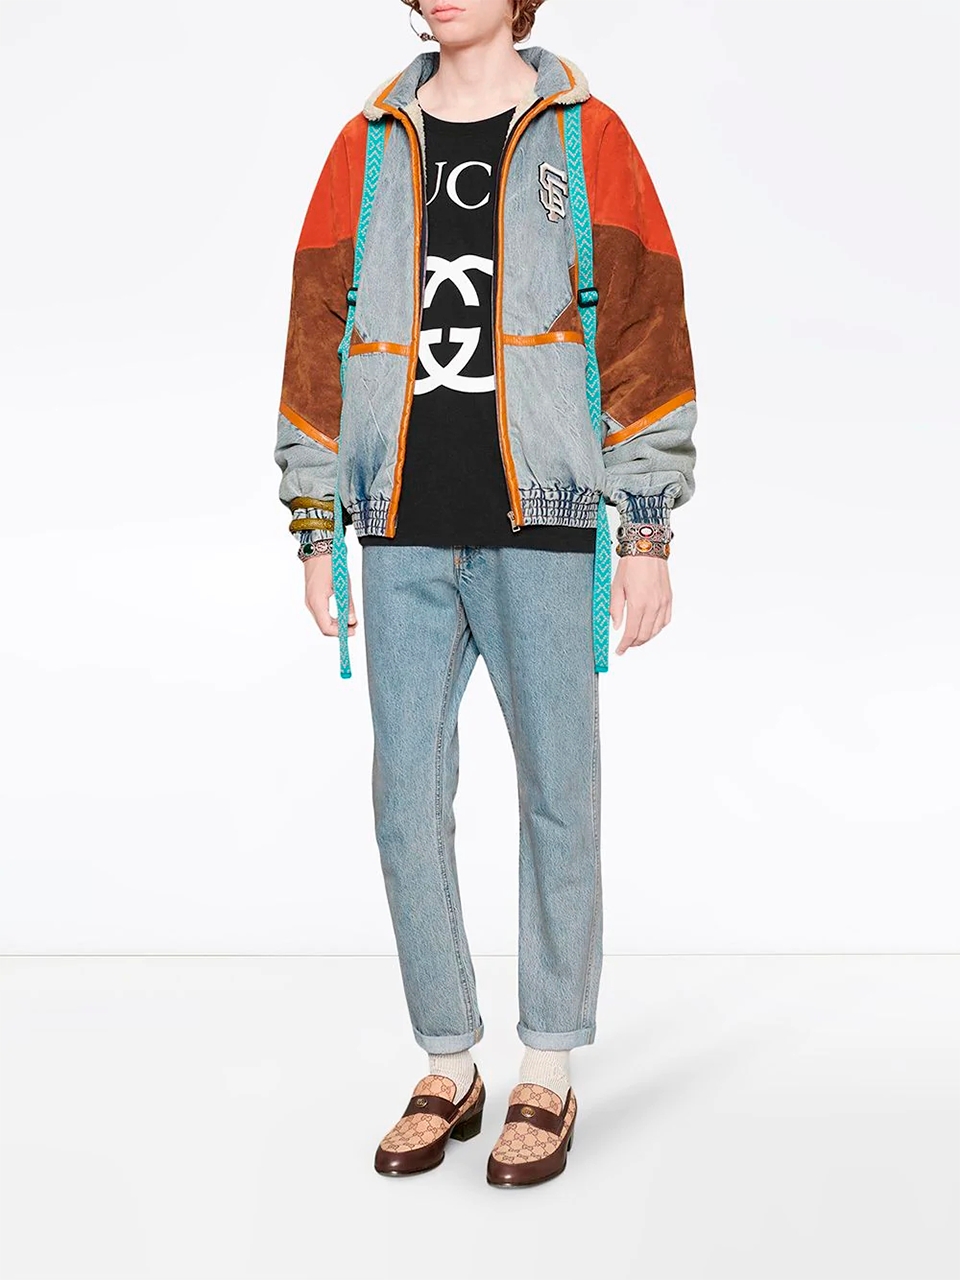 Imagem de: Camiseta Gucci Oversized Preta com Interlocking G